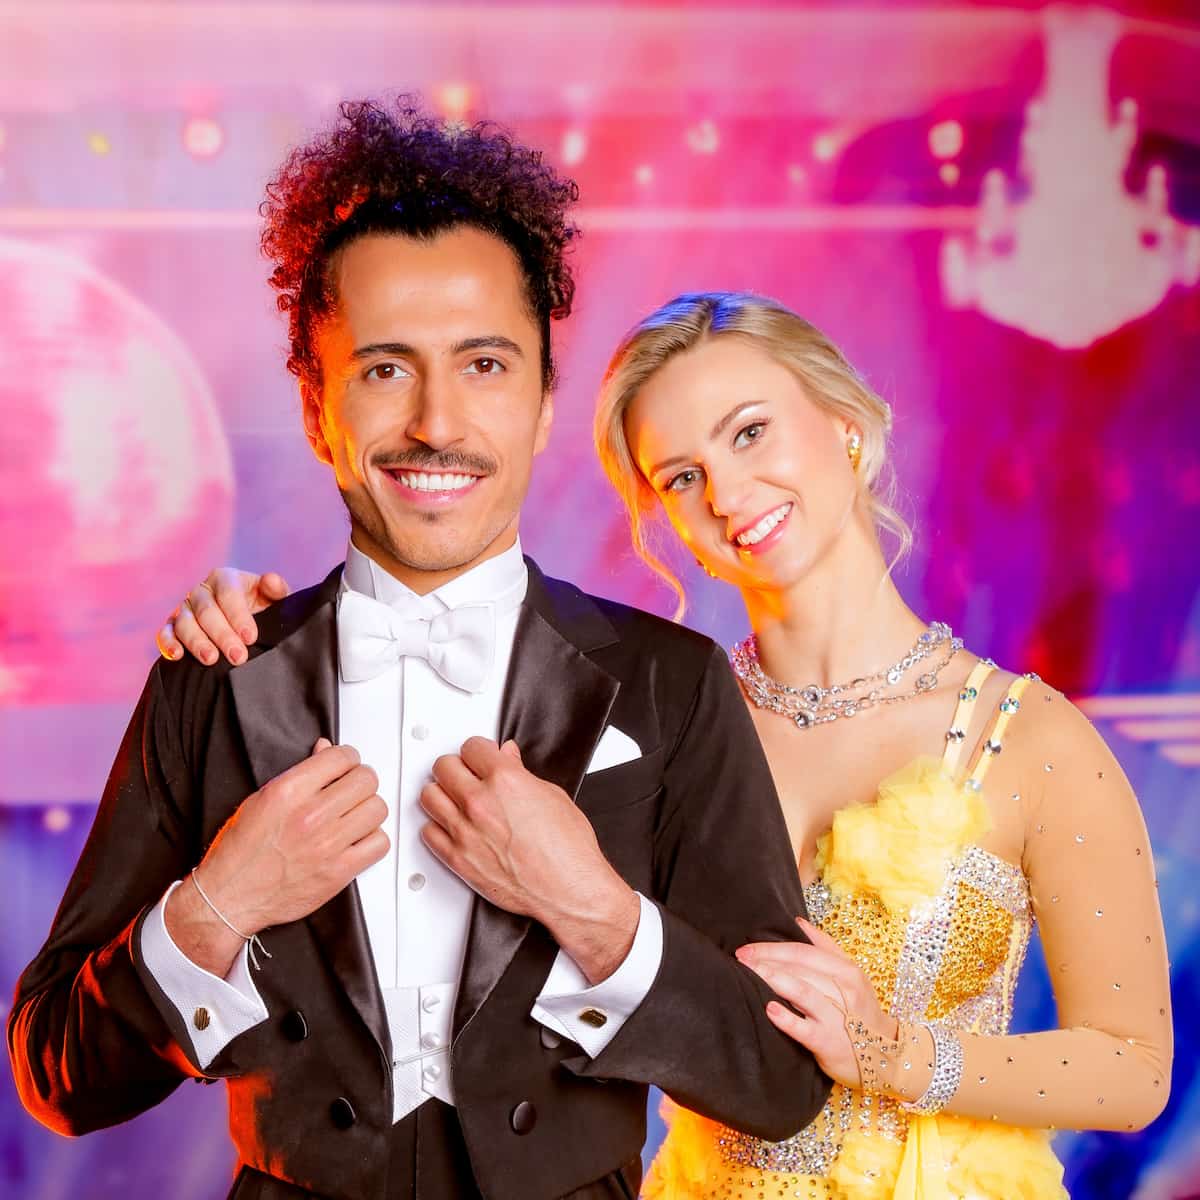 Omar Khir Alanam & Kati Kallus im Kostüm für die Dancing Stars 14.4.2023